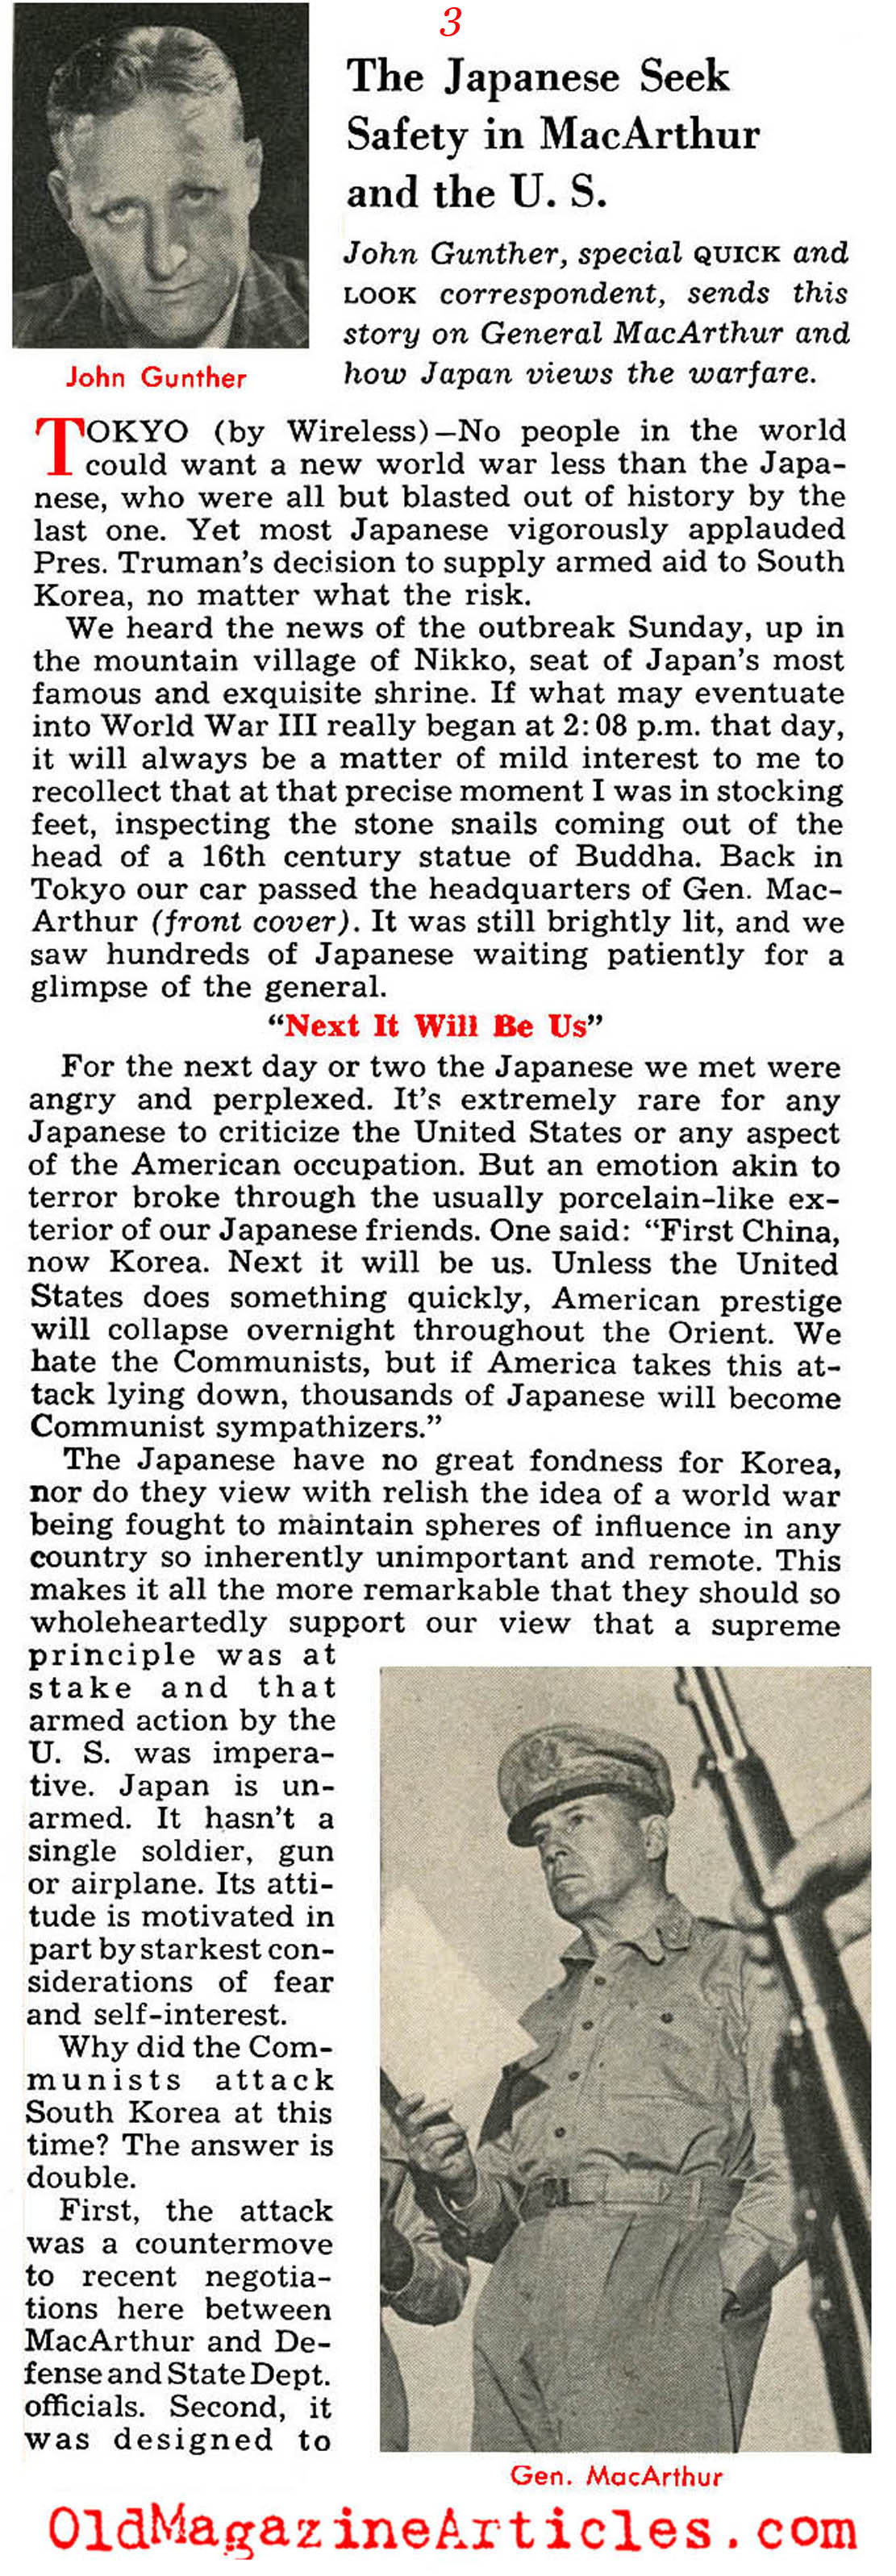 The Start of the Korean War (Quick Magazine, 1950)